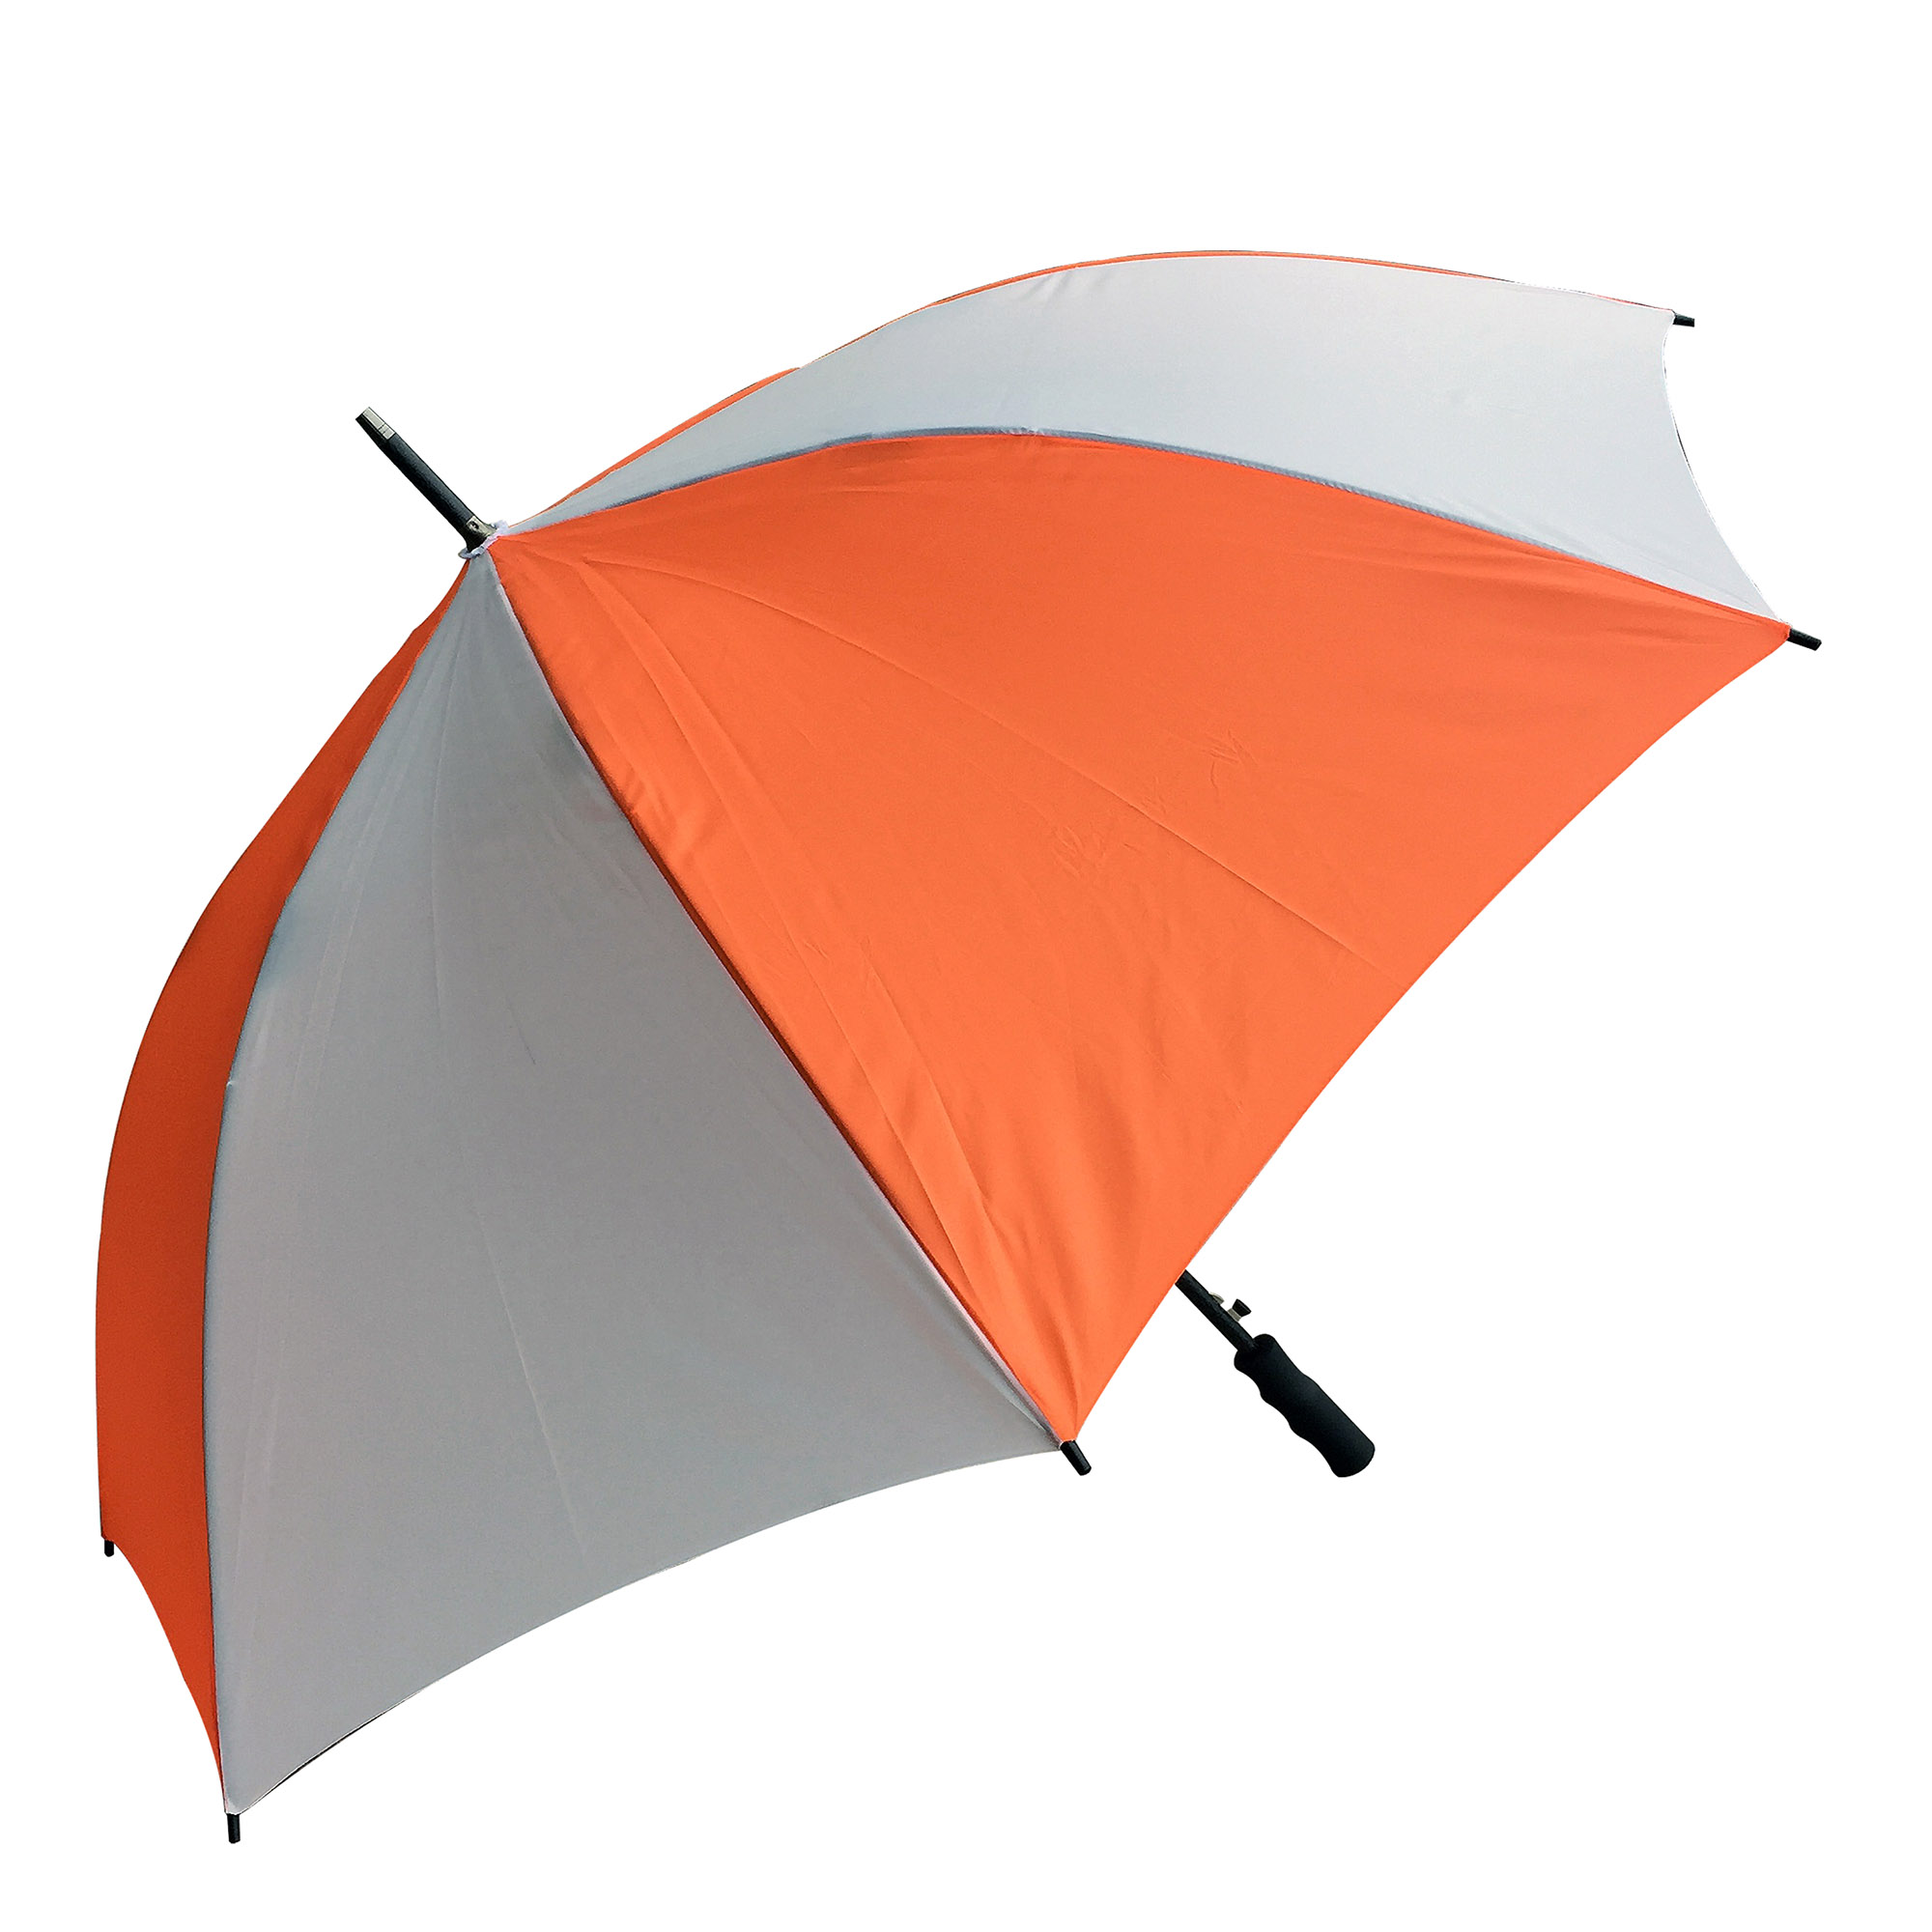 Bulk Promotional White And Orange Sands Umbrella Online In Perth Australia